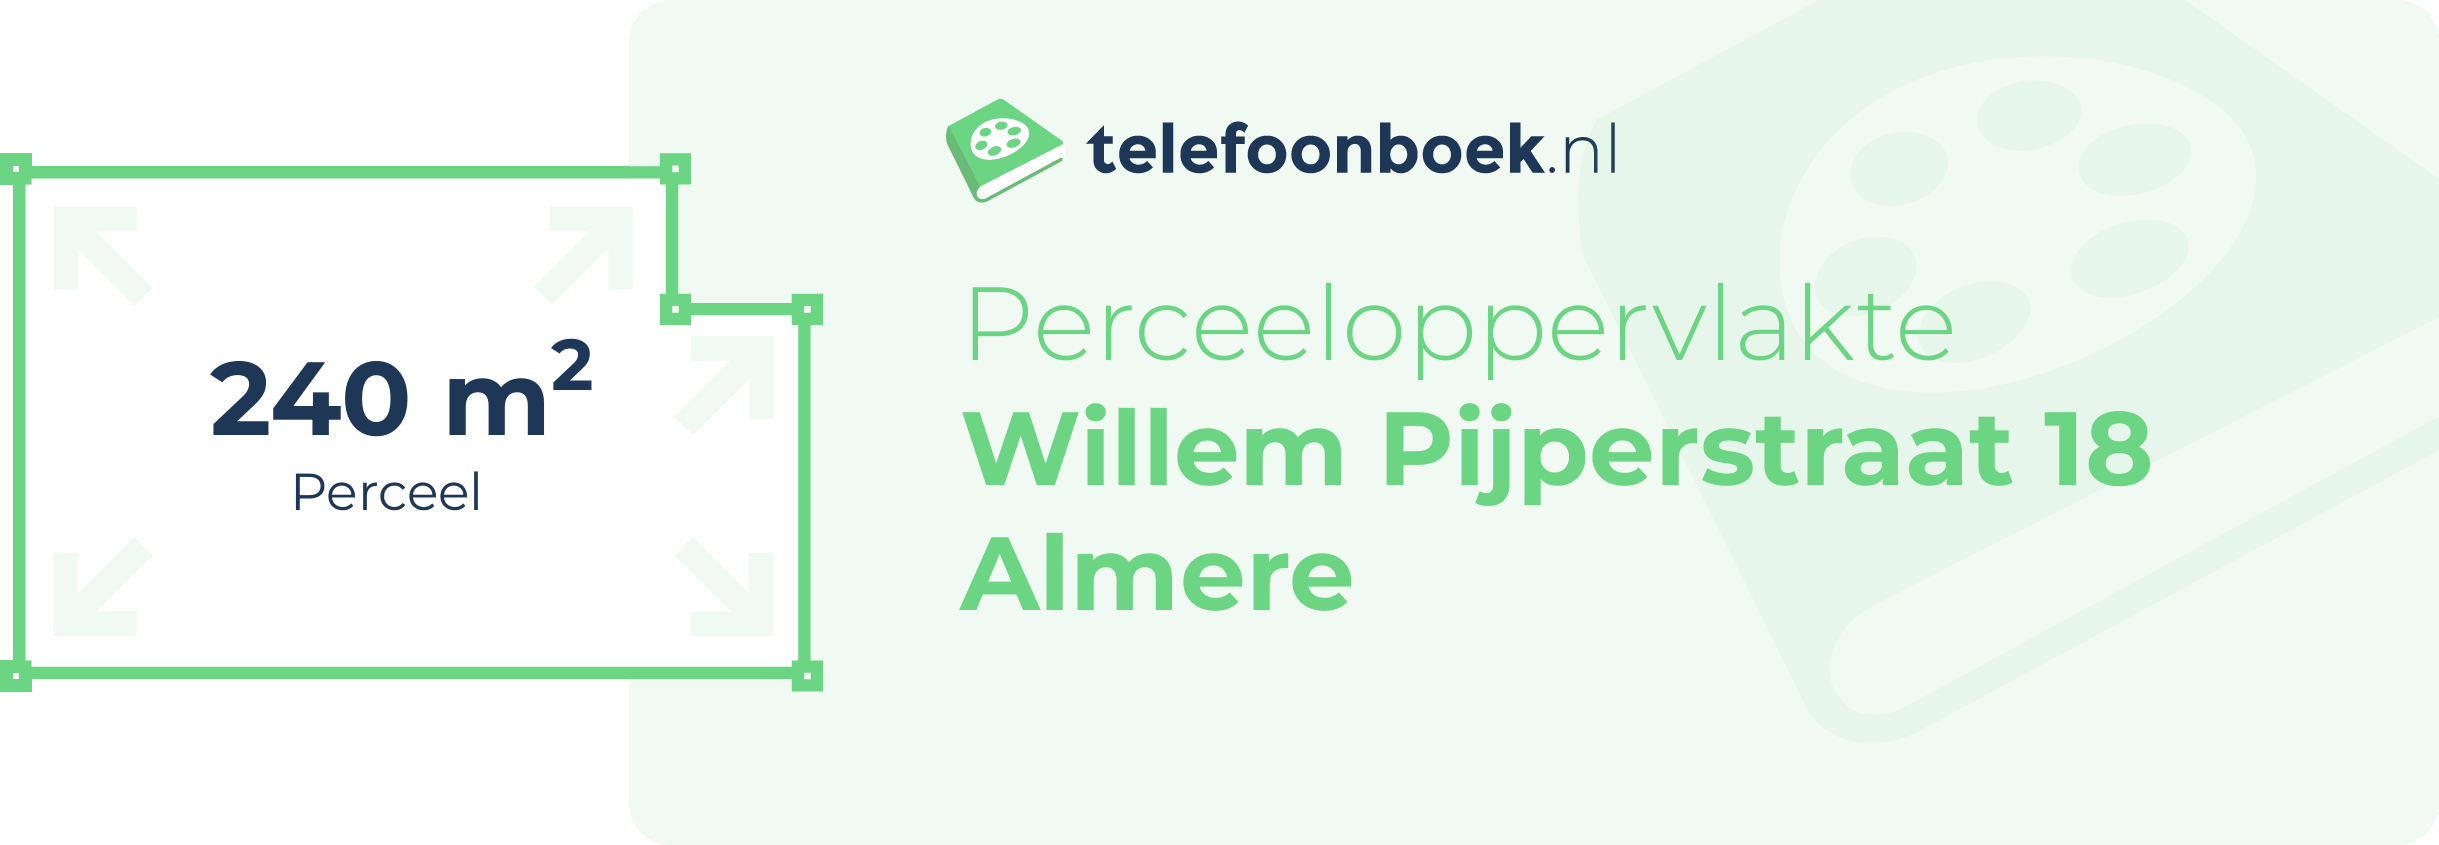 Perceeloppervlakte Willem Pijperstraat 18 Almere